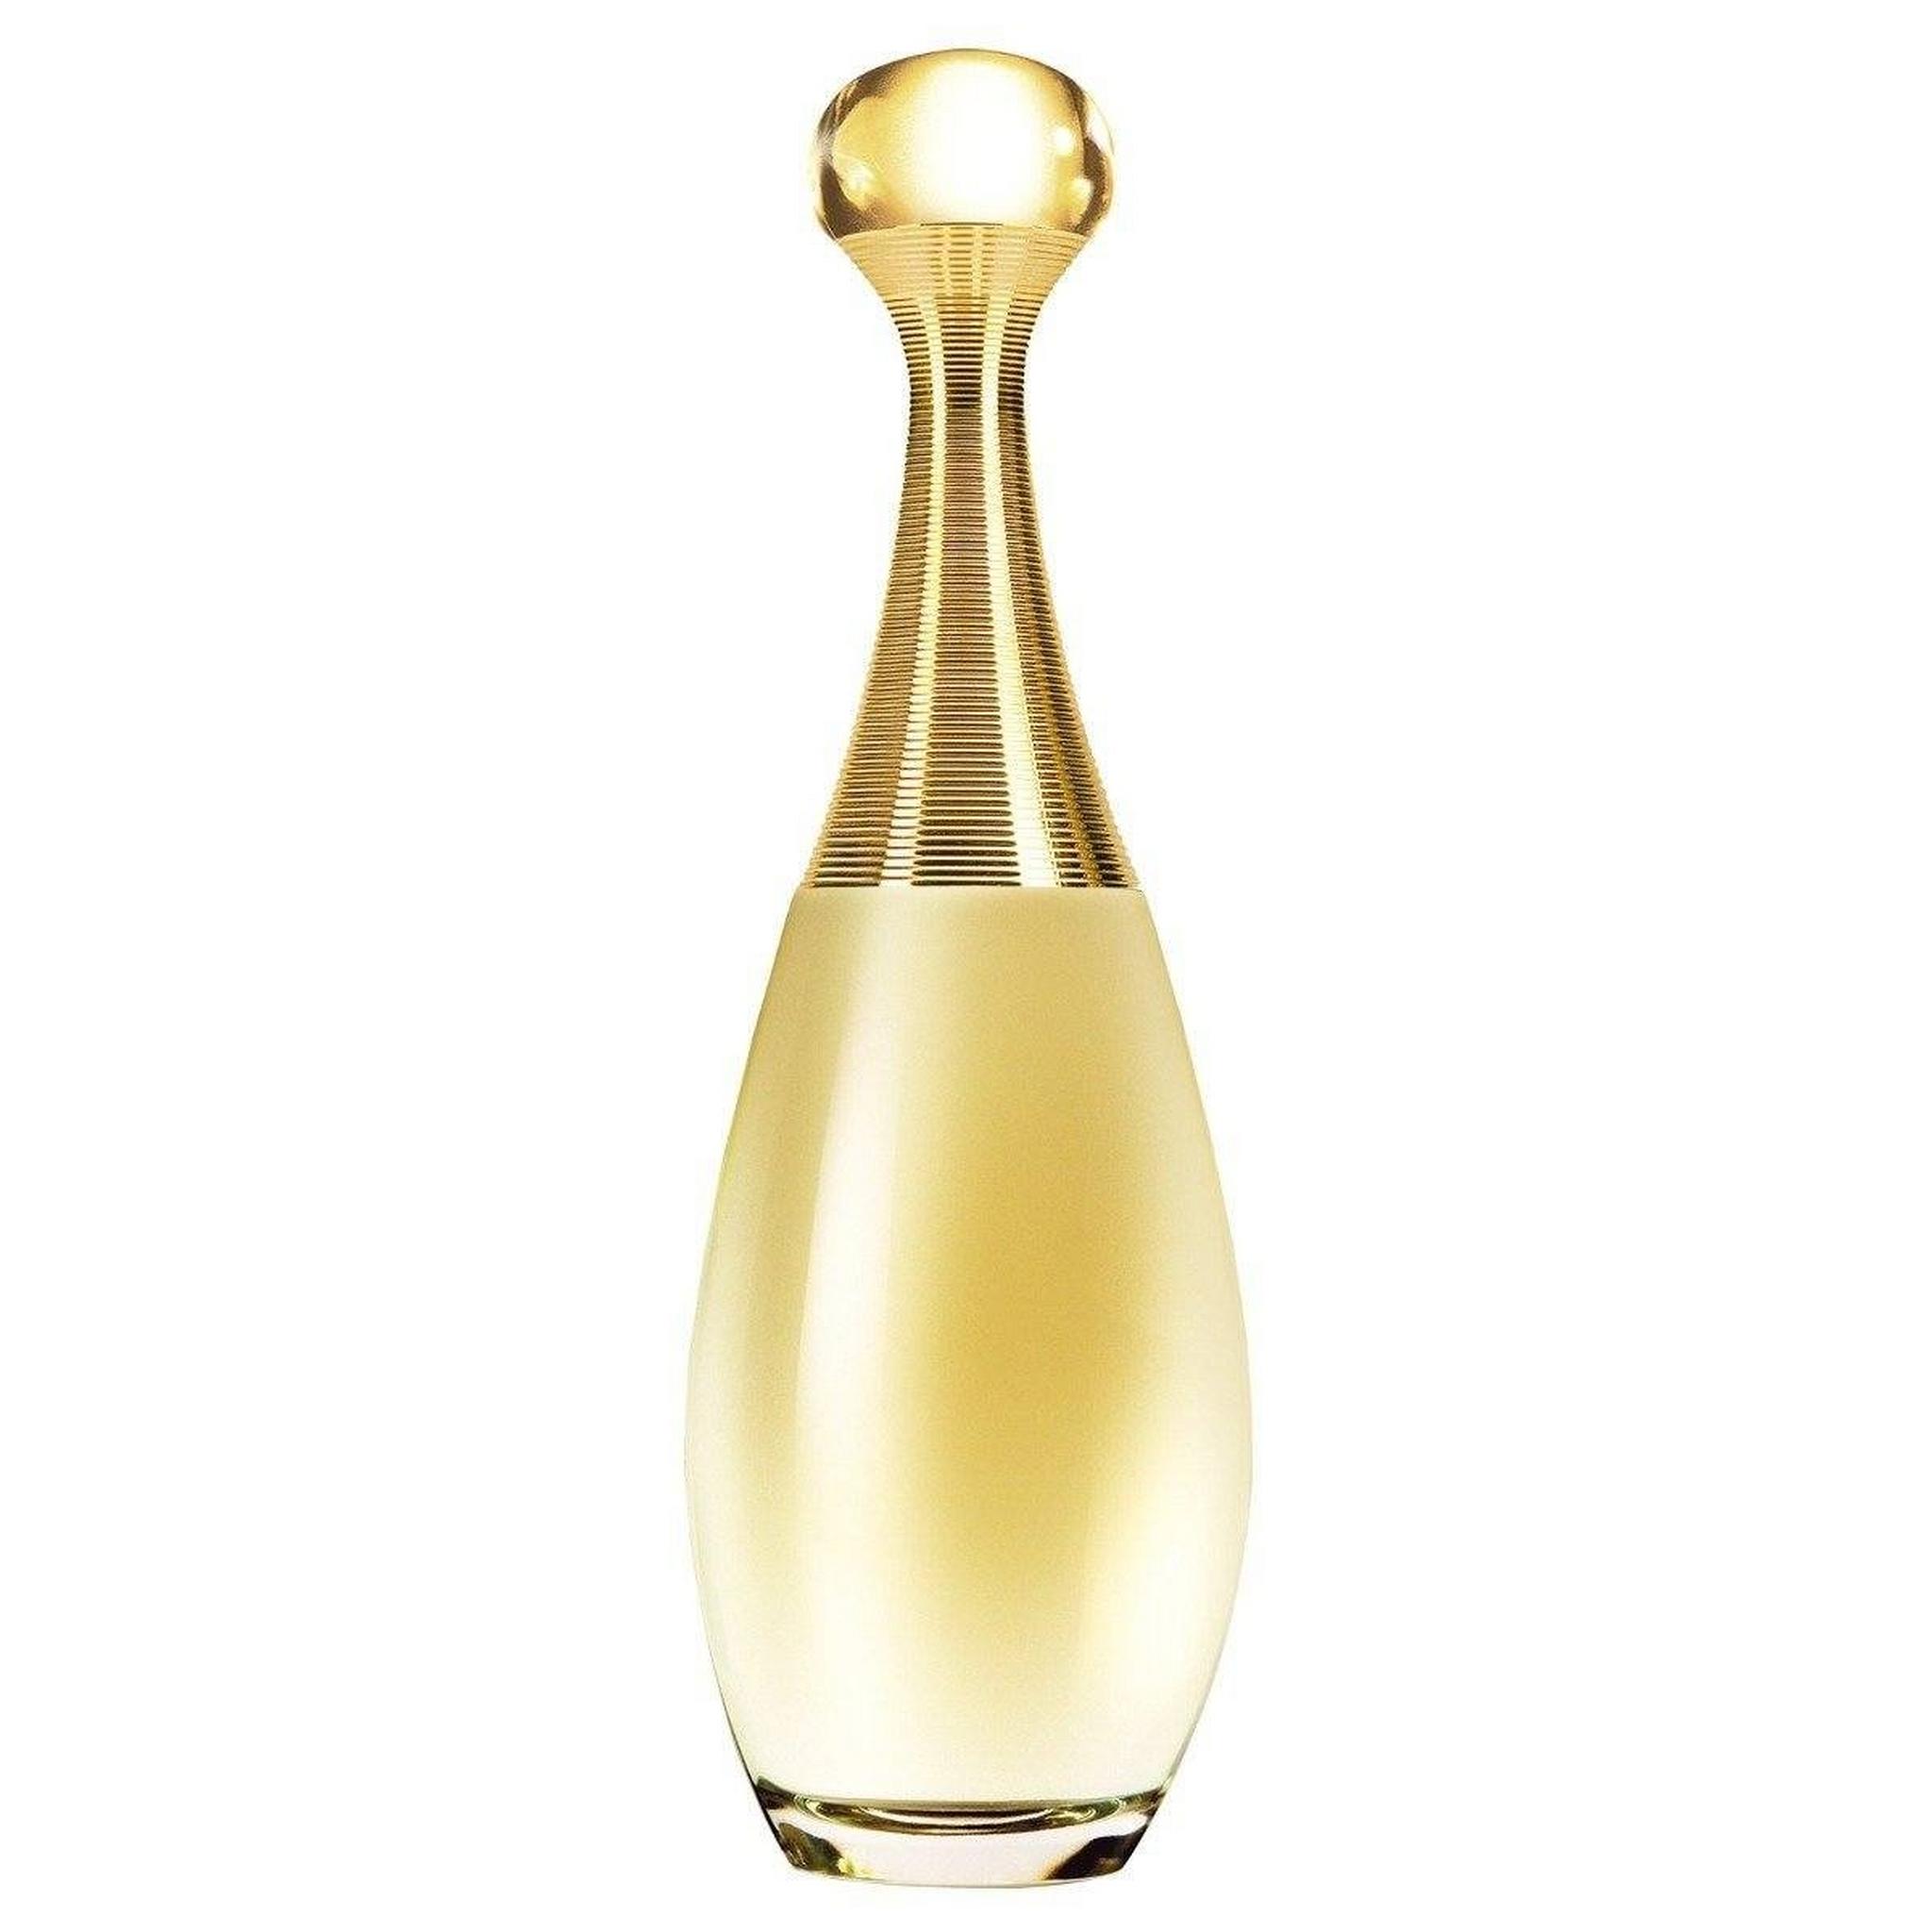 J'adore by Christian Dior for Women 100 mL Eau de Parfum